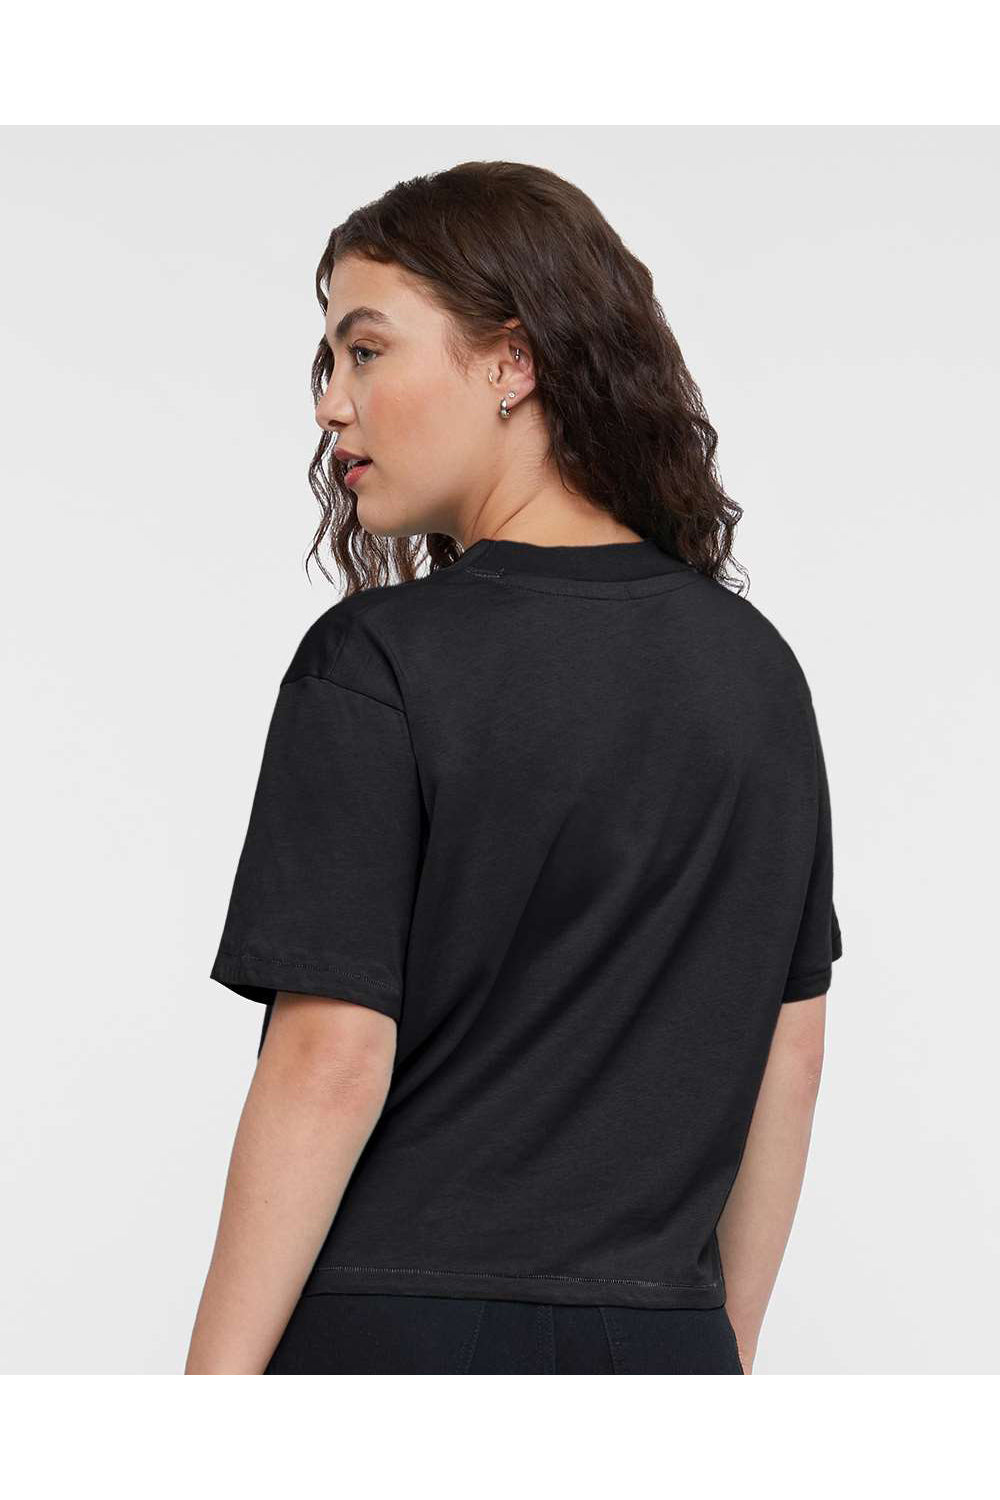 LAT 3518 Womens Boxy Short Sleeve Crewneck T-Shirt Blended Black Model Back